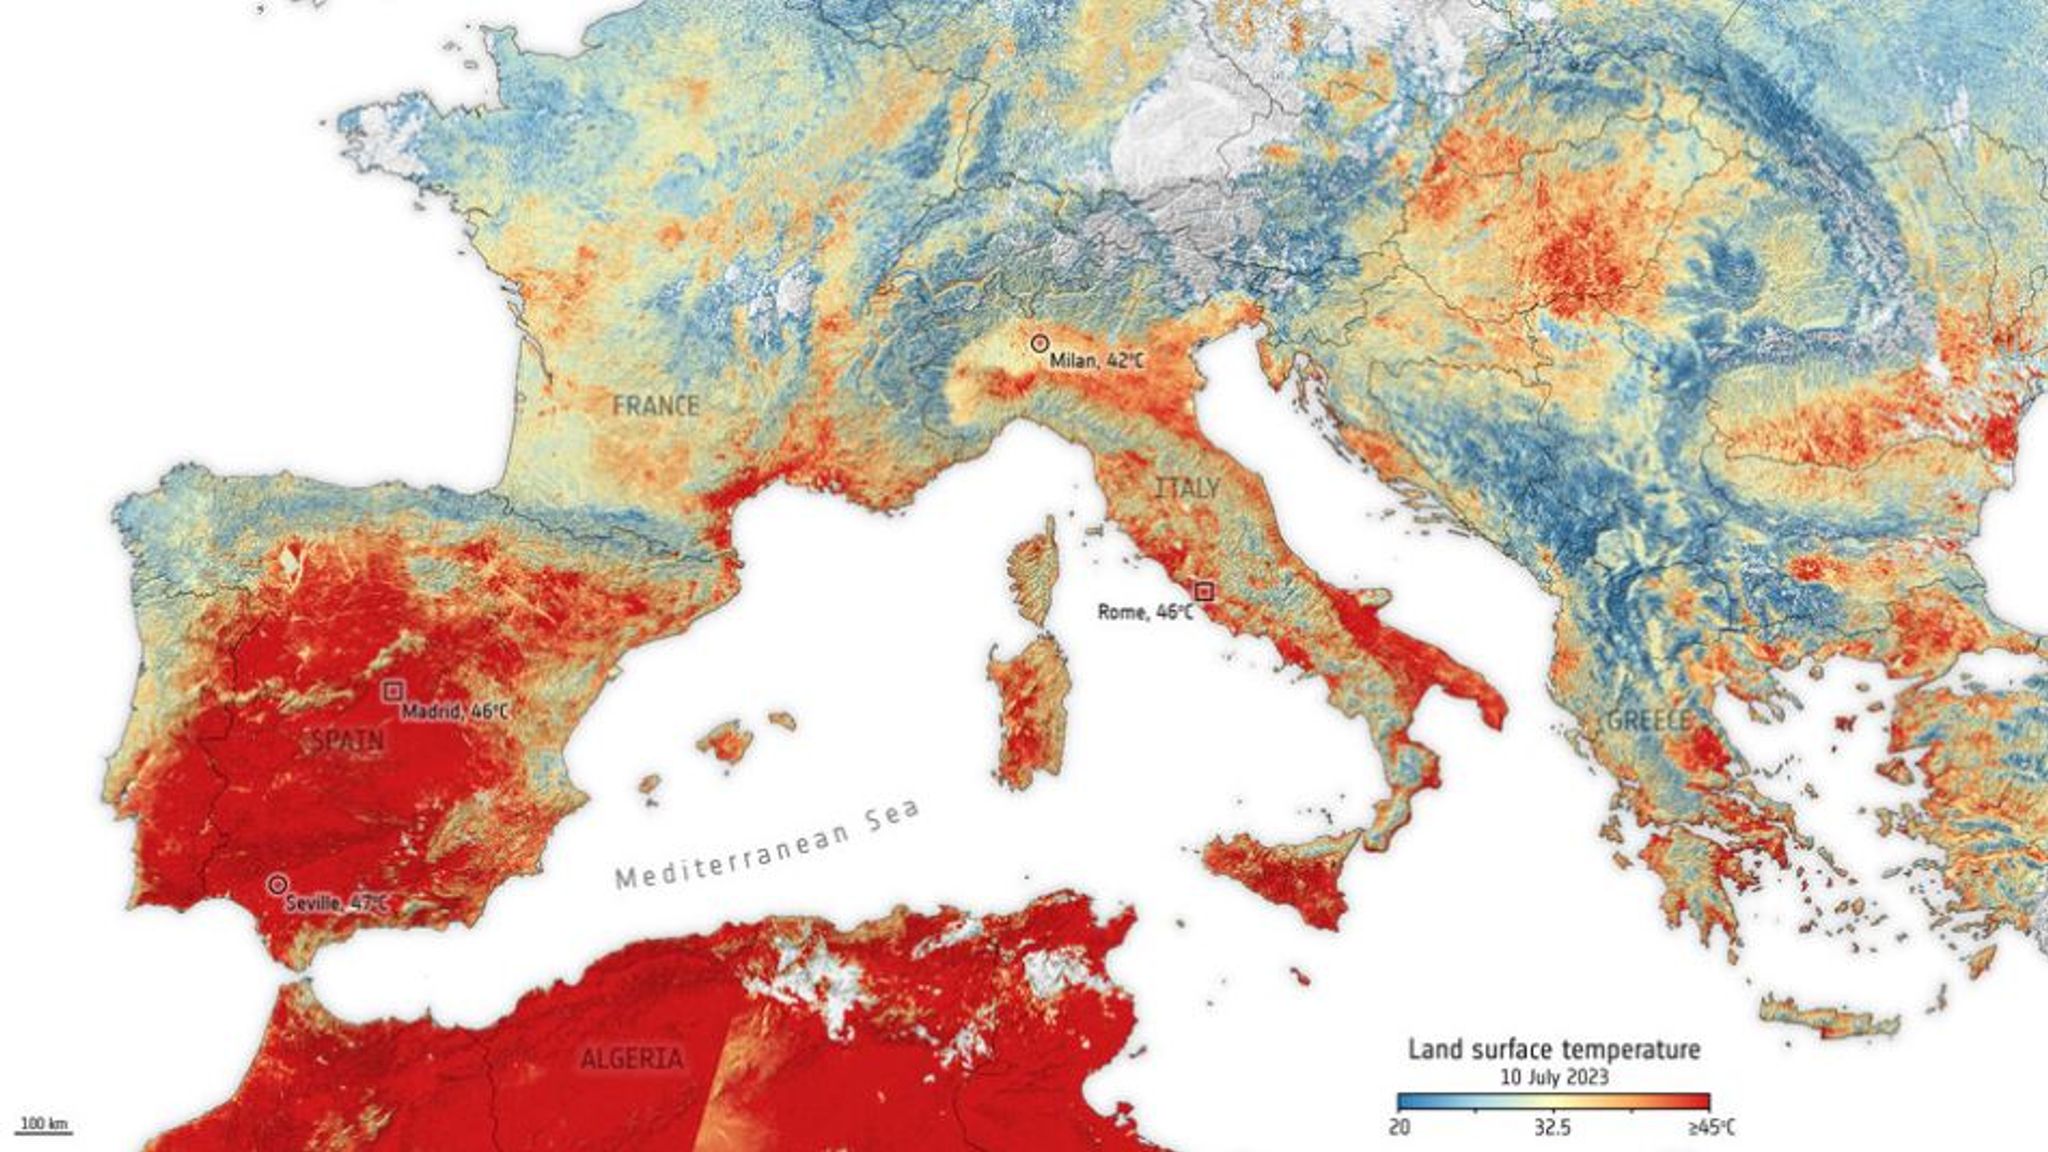 Cerberus heatwave European data shows land temperatures are scorching